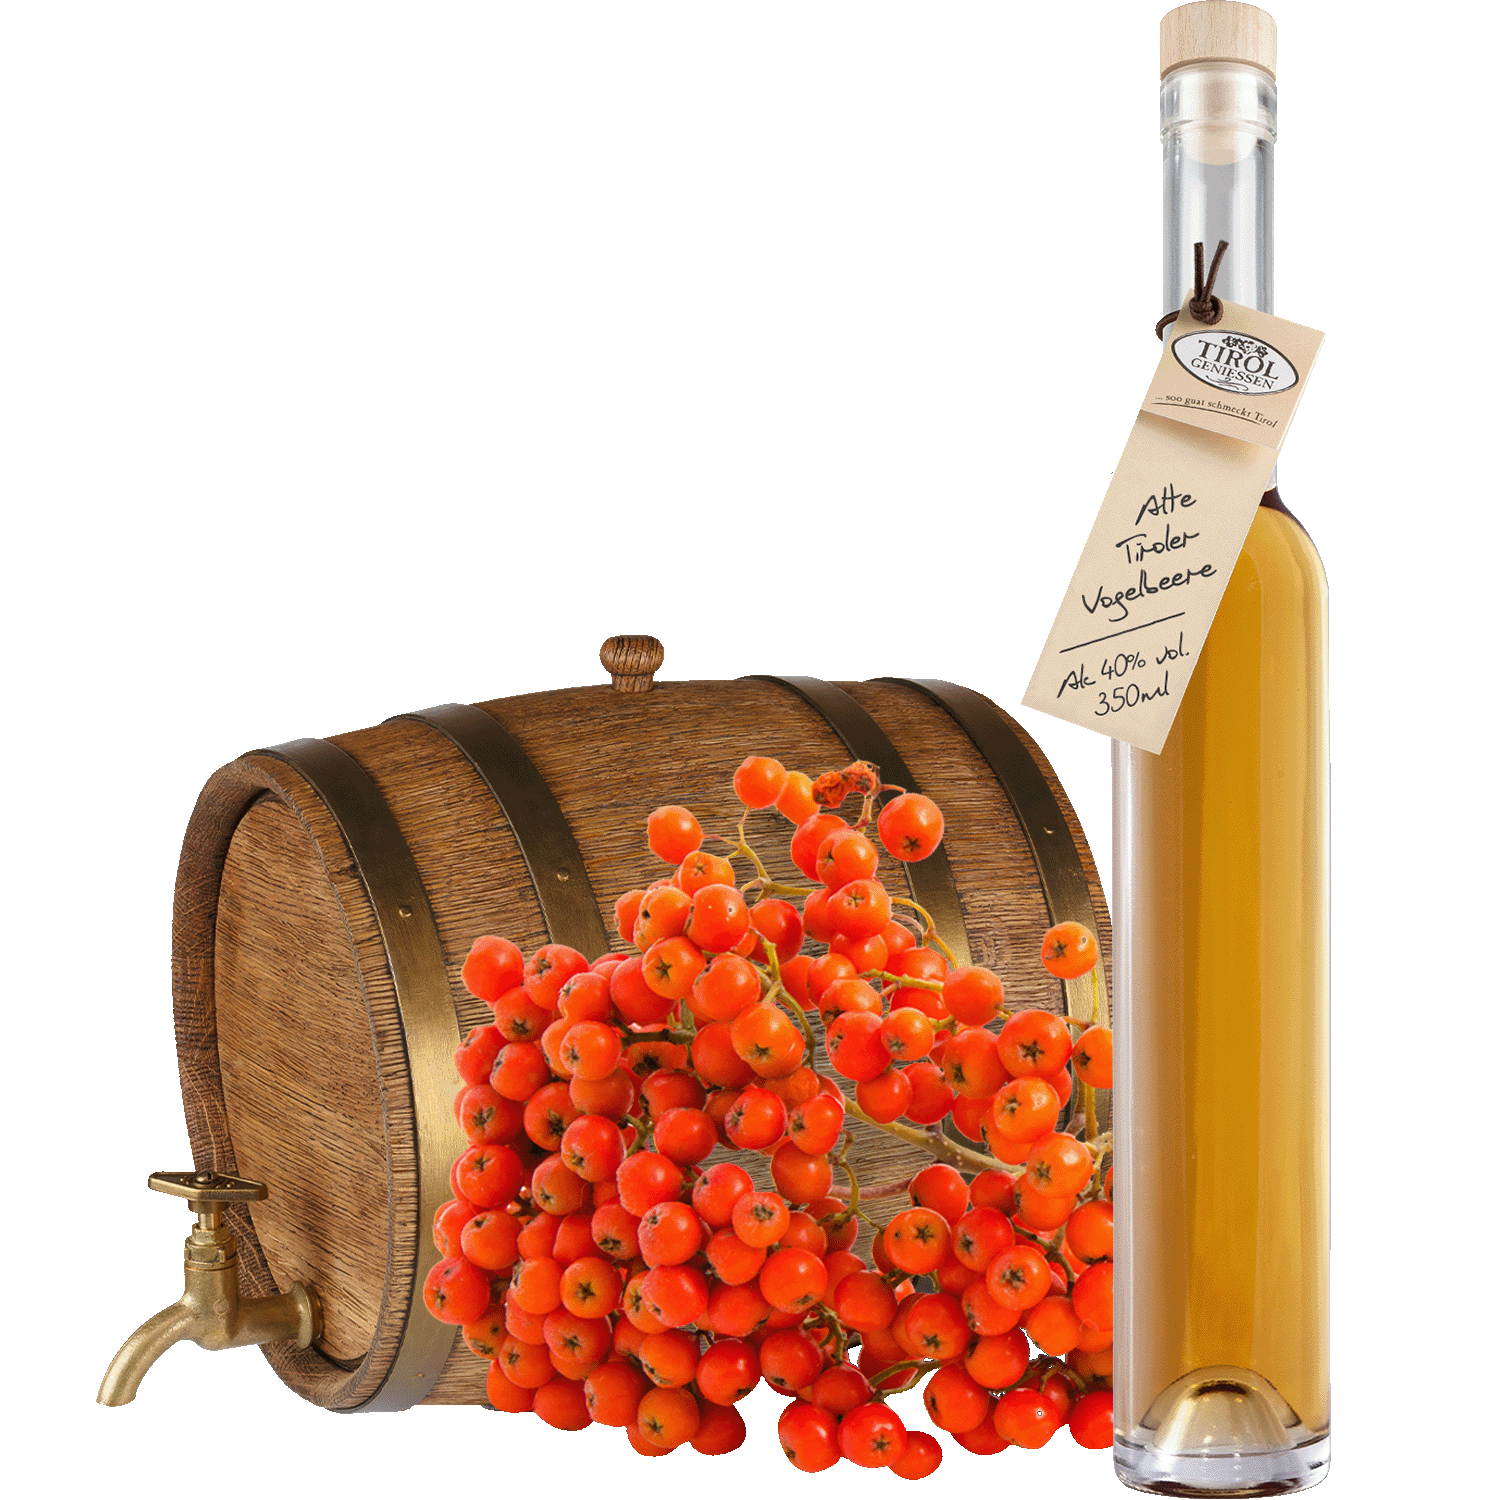 Old Rowan Berry Spirit in gift bottle from Austria from Tirol Geniessen